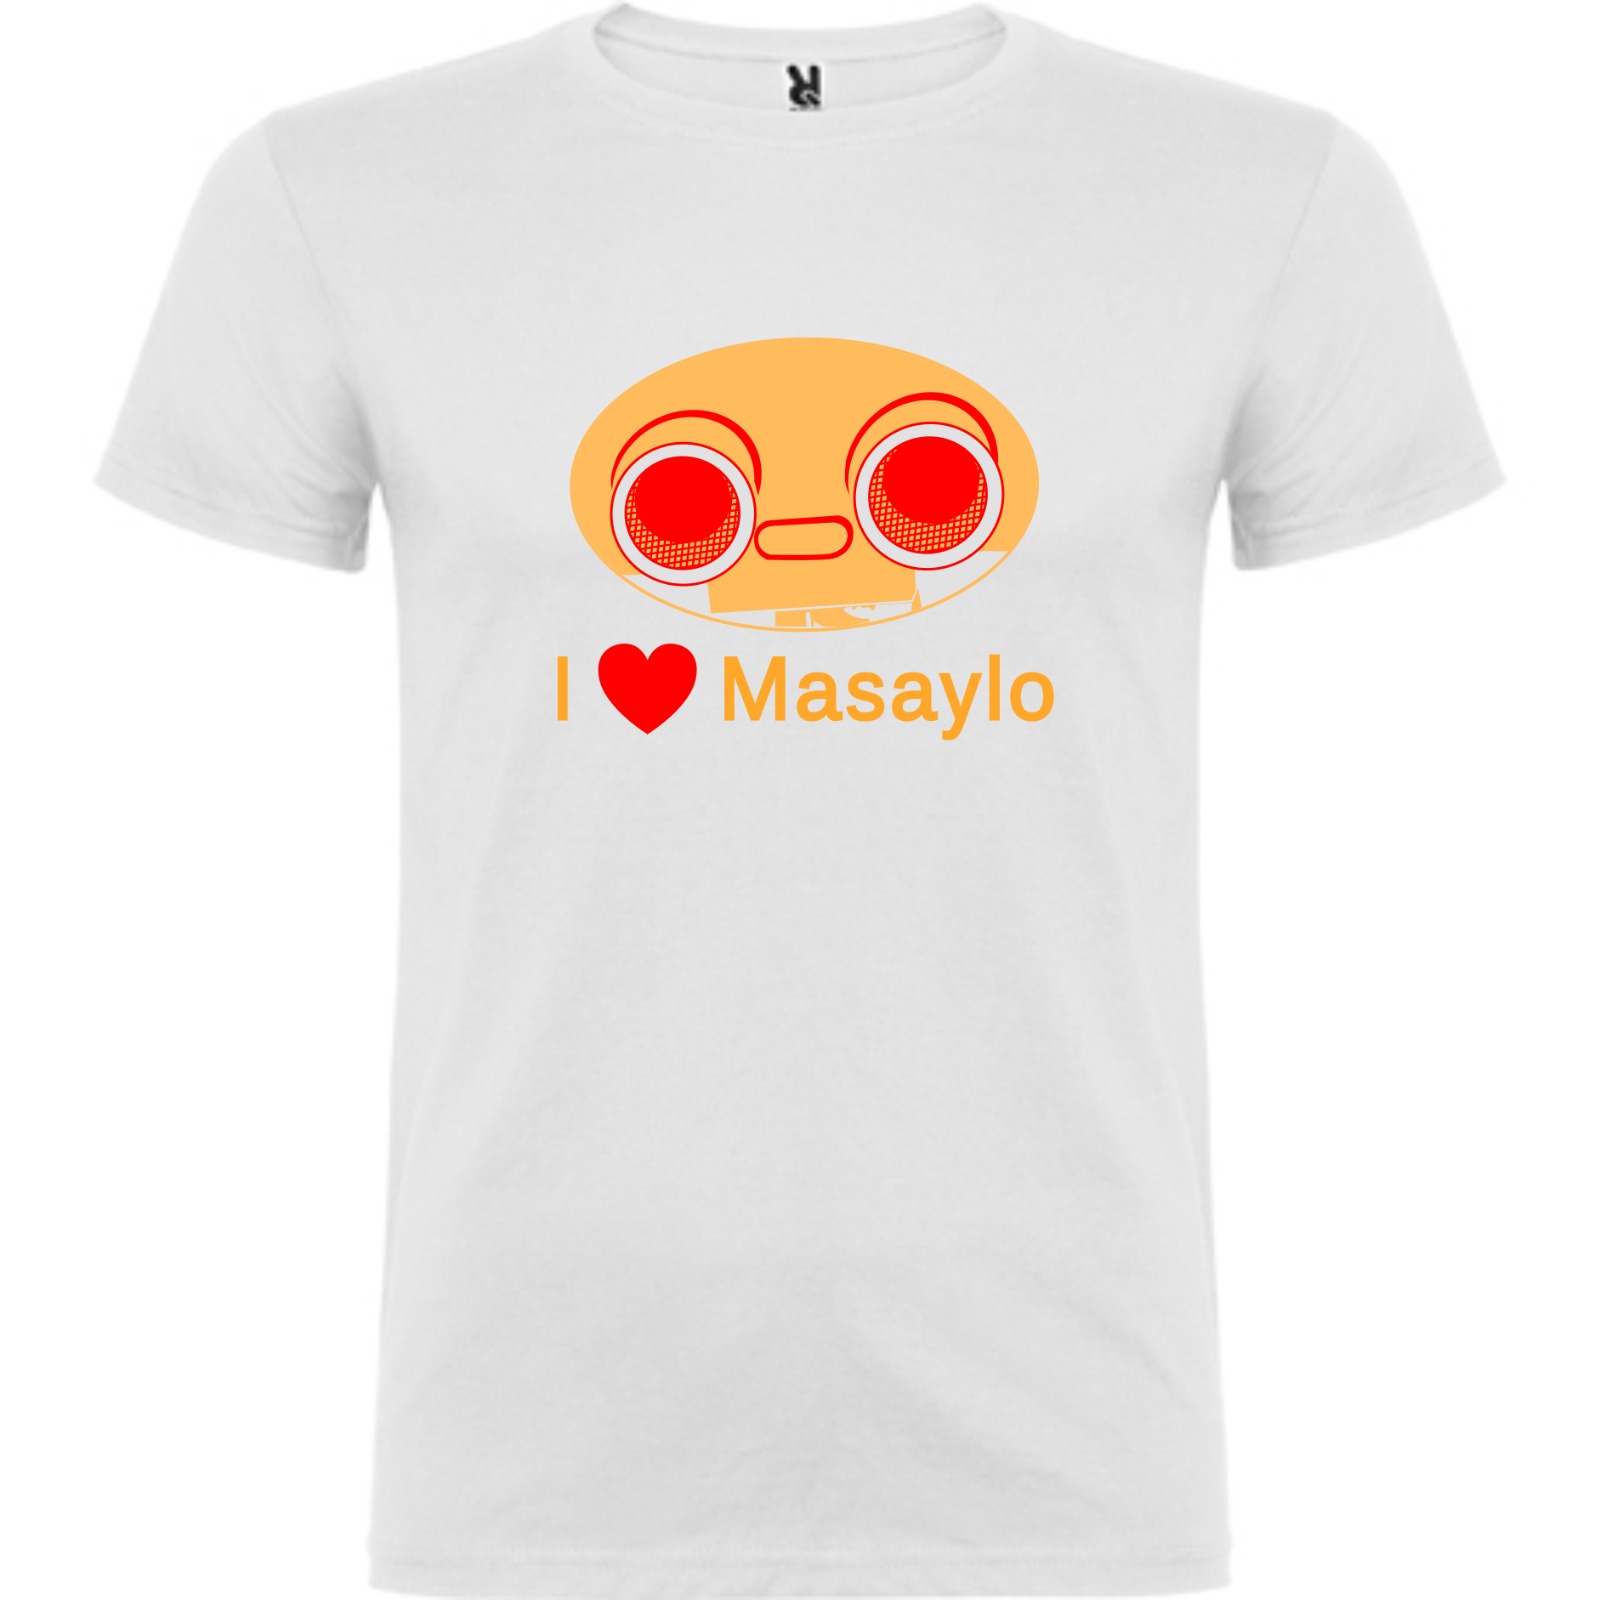 Camiseta blanca con logo Masaylo